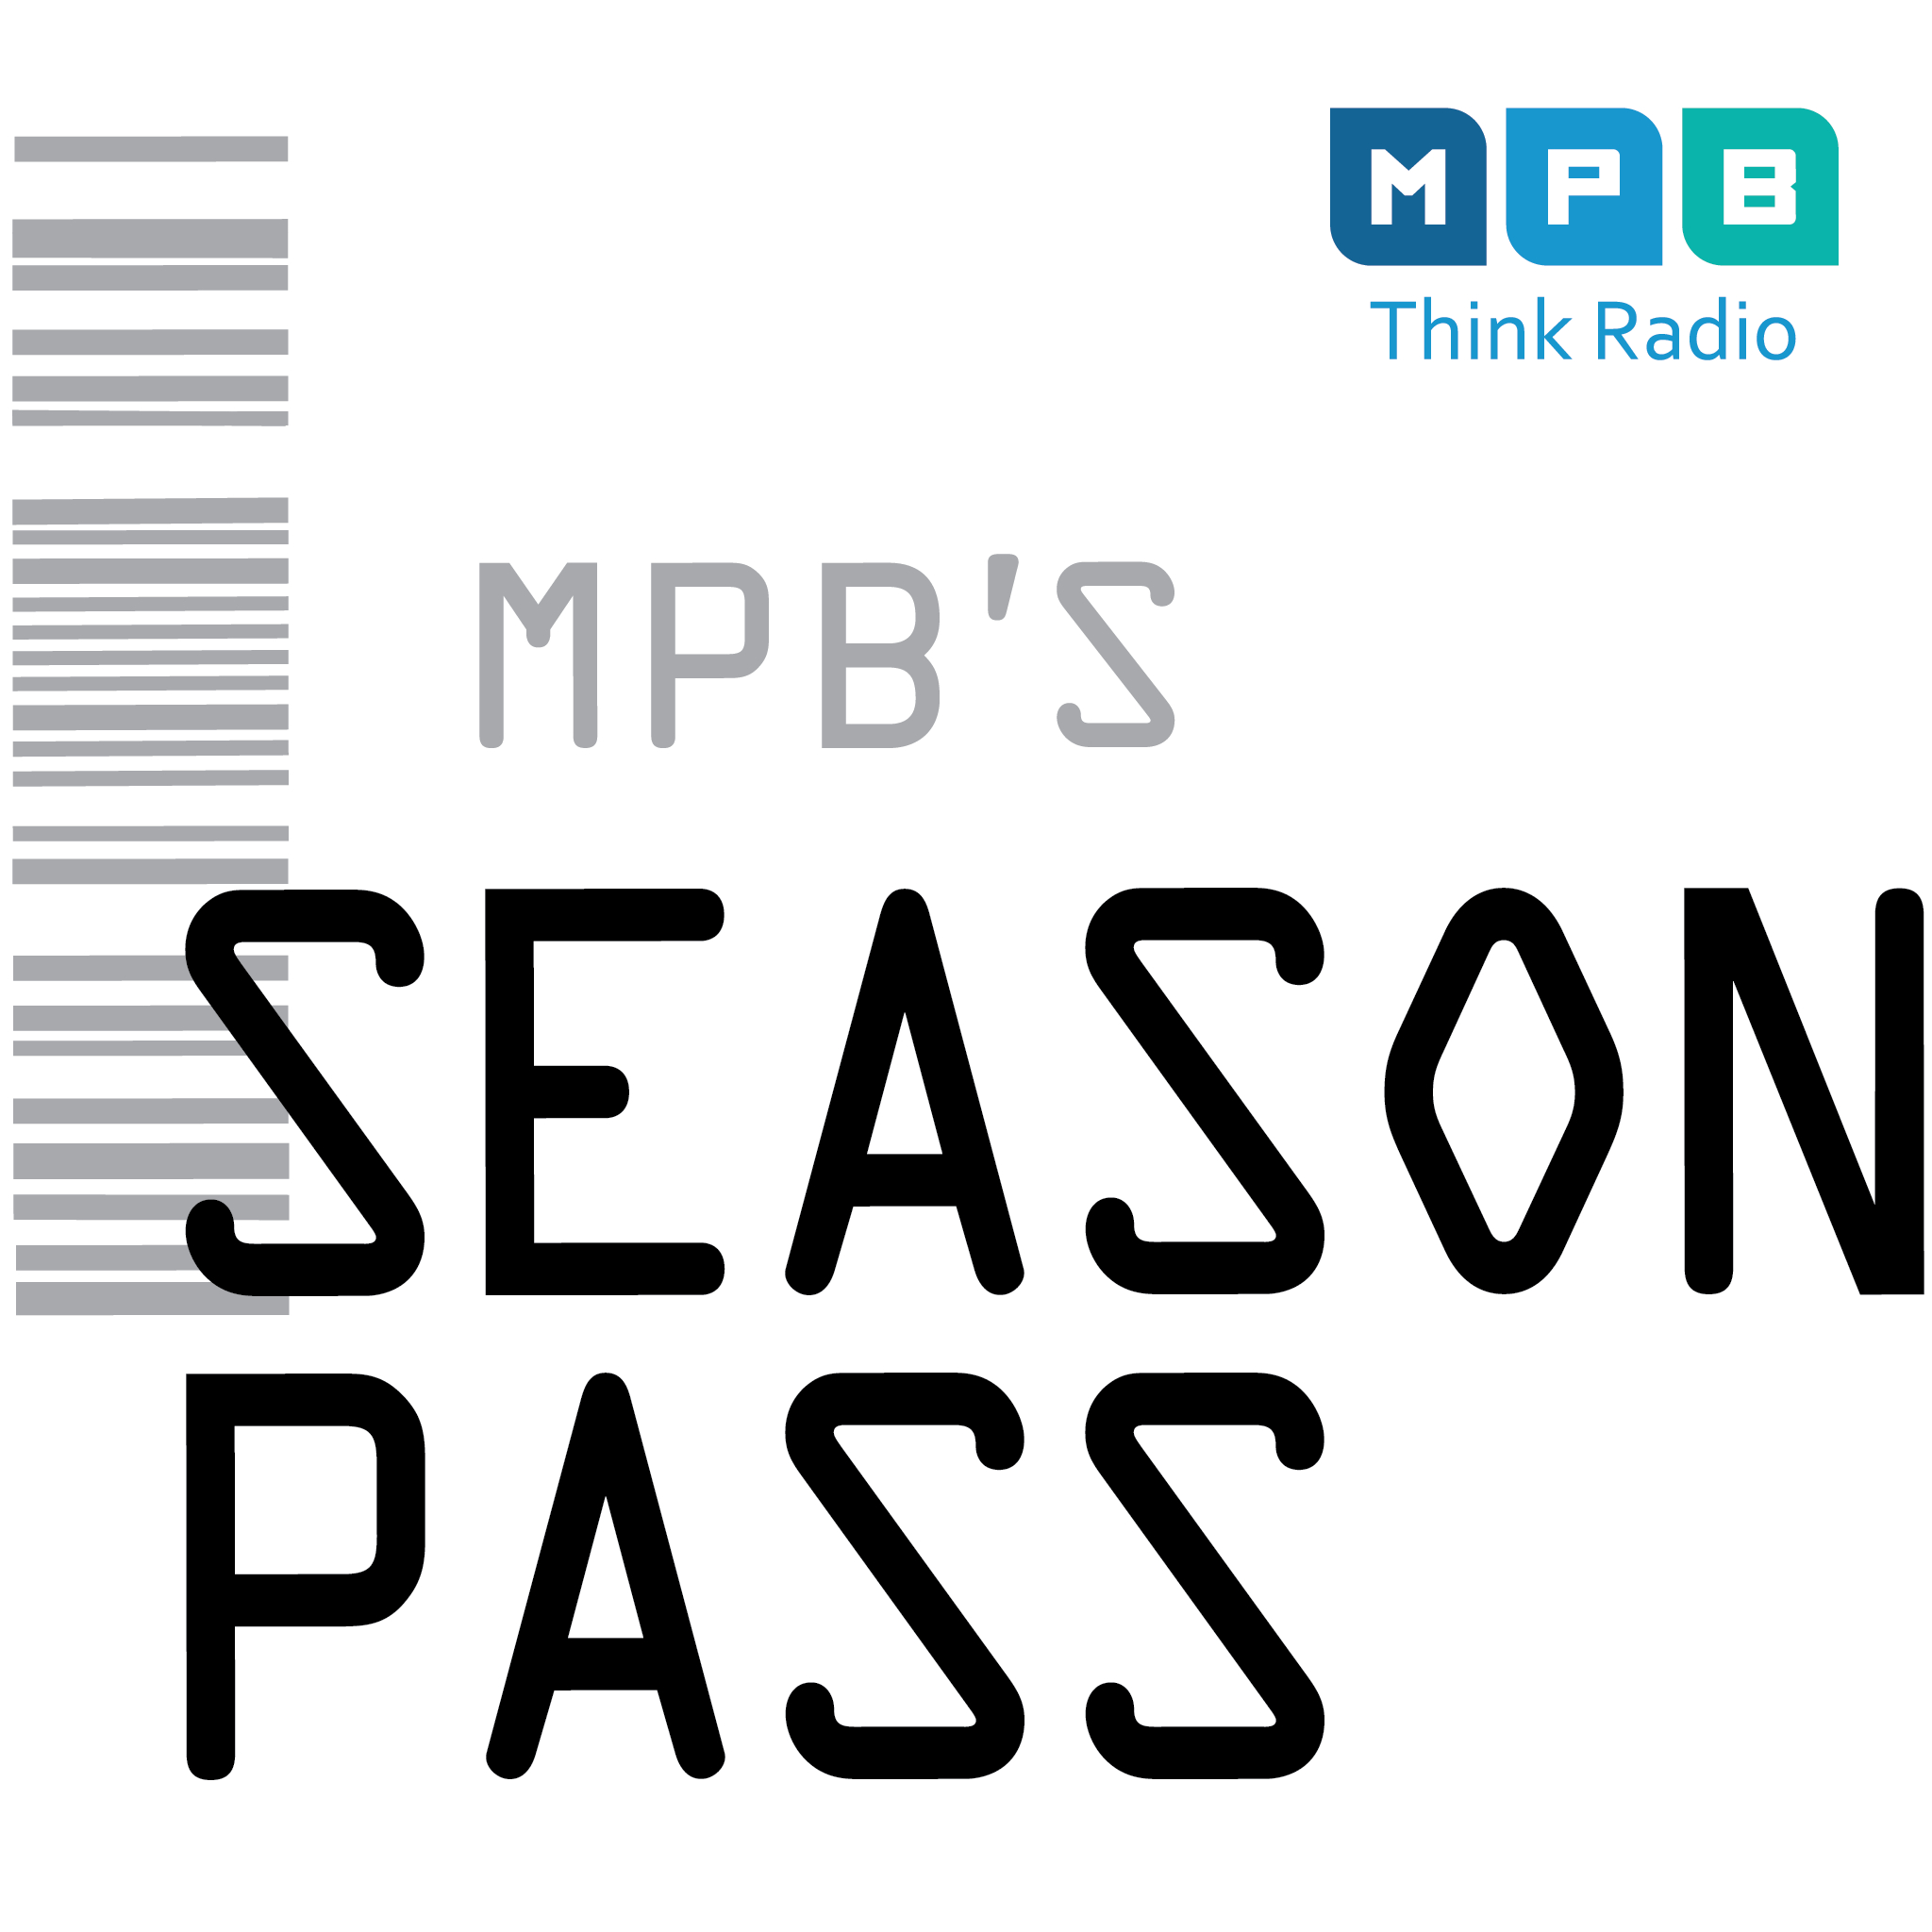 Mpb : Mississippi Public Broadcasting